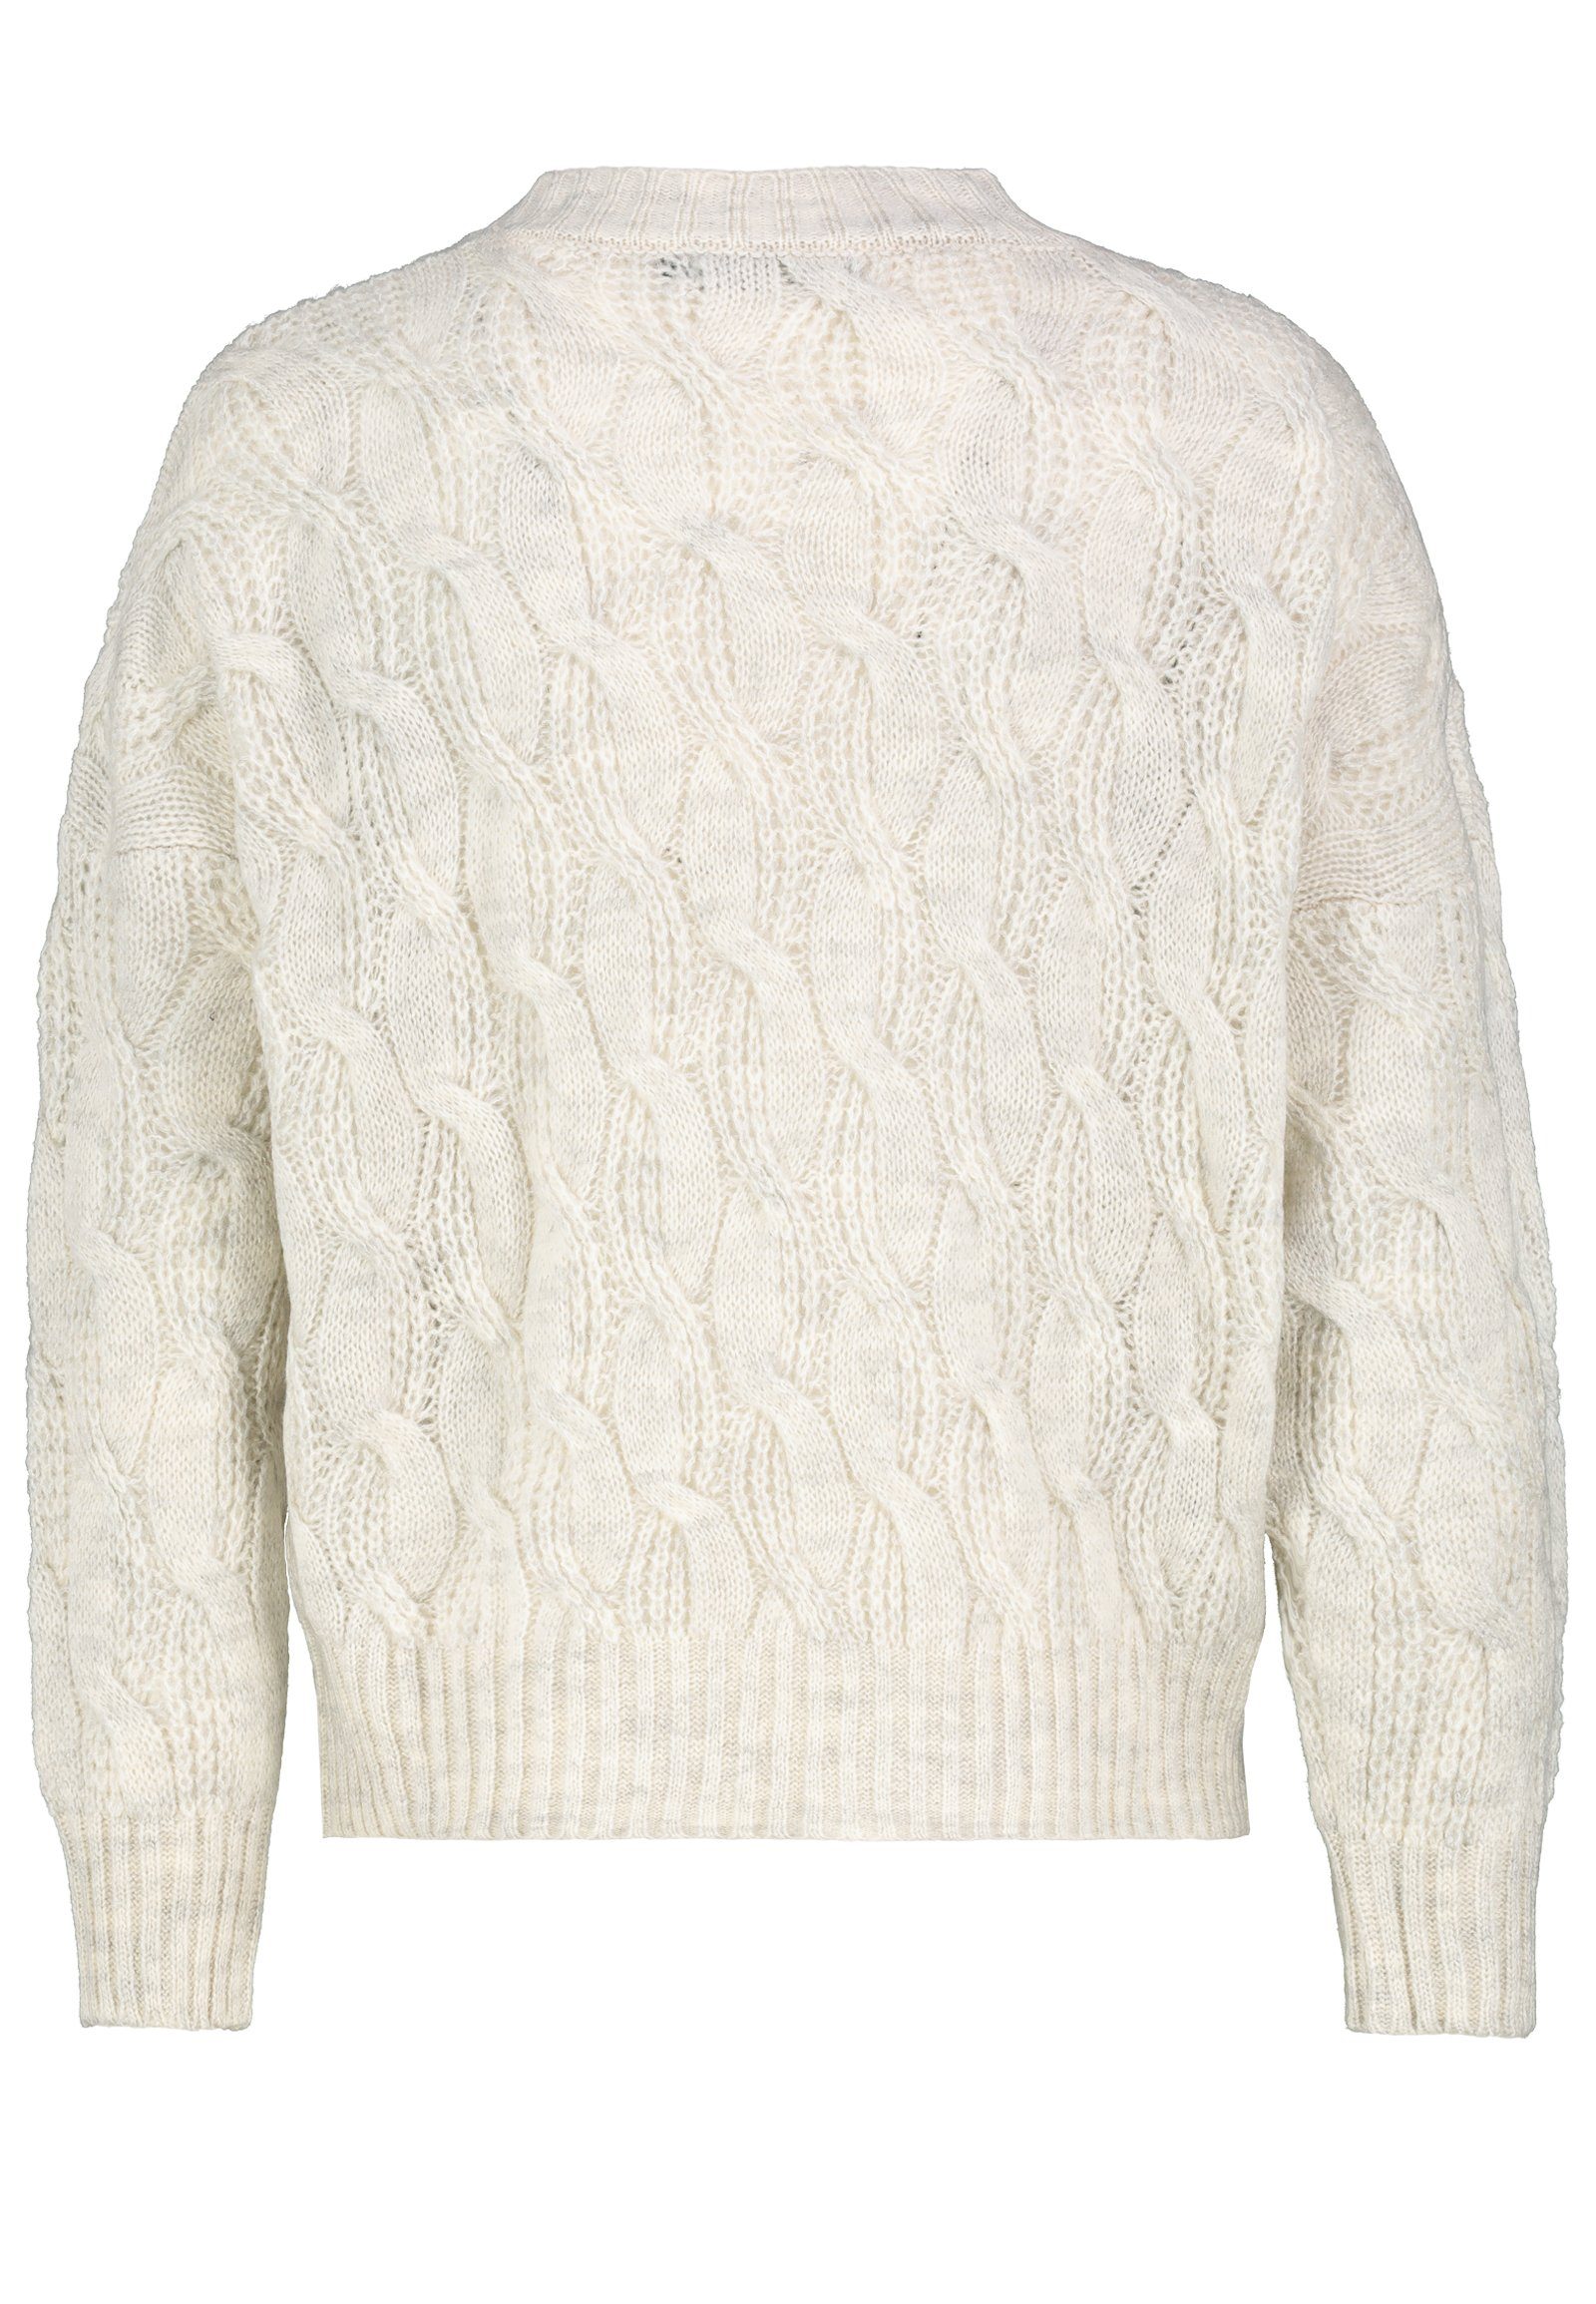 SUBLEVEL Strickpullover Pullover mit Strickmuster white